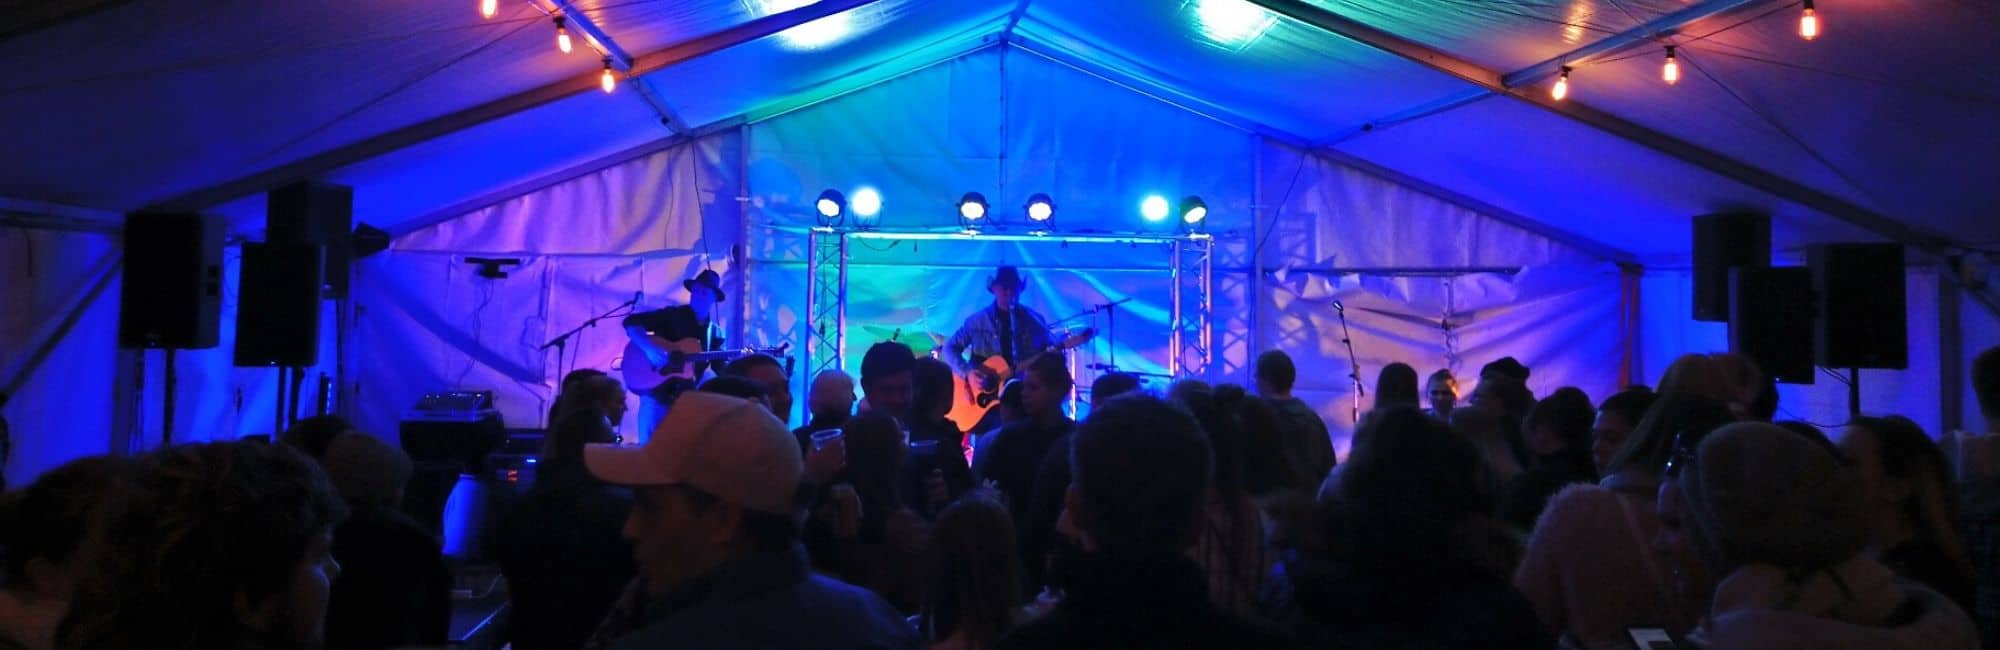 Hobart Events AV | Truss Hire for Bands